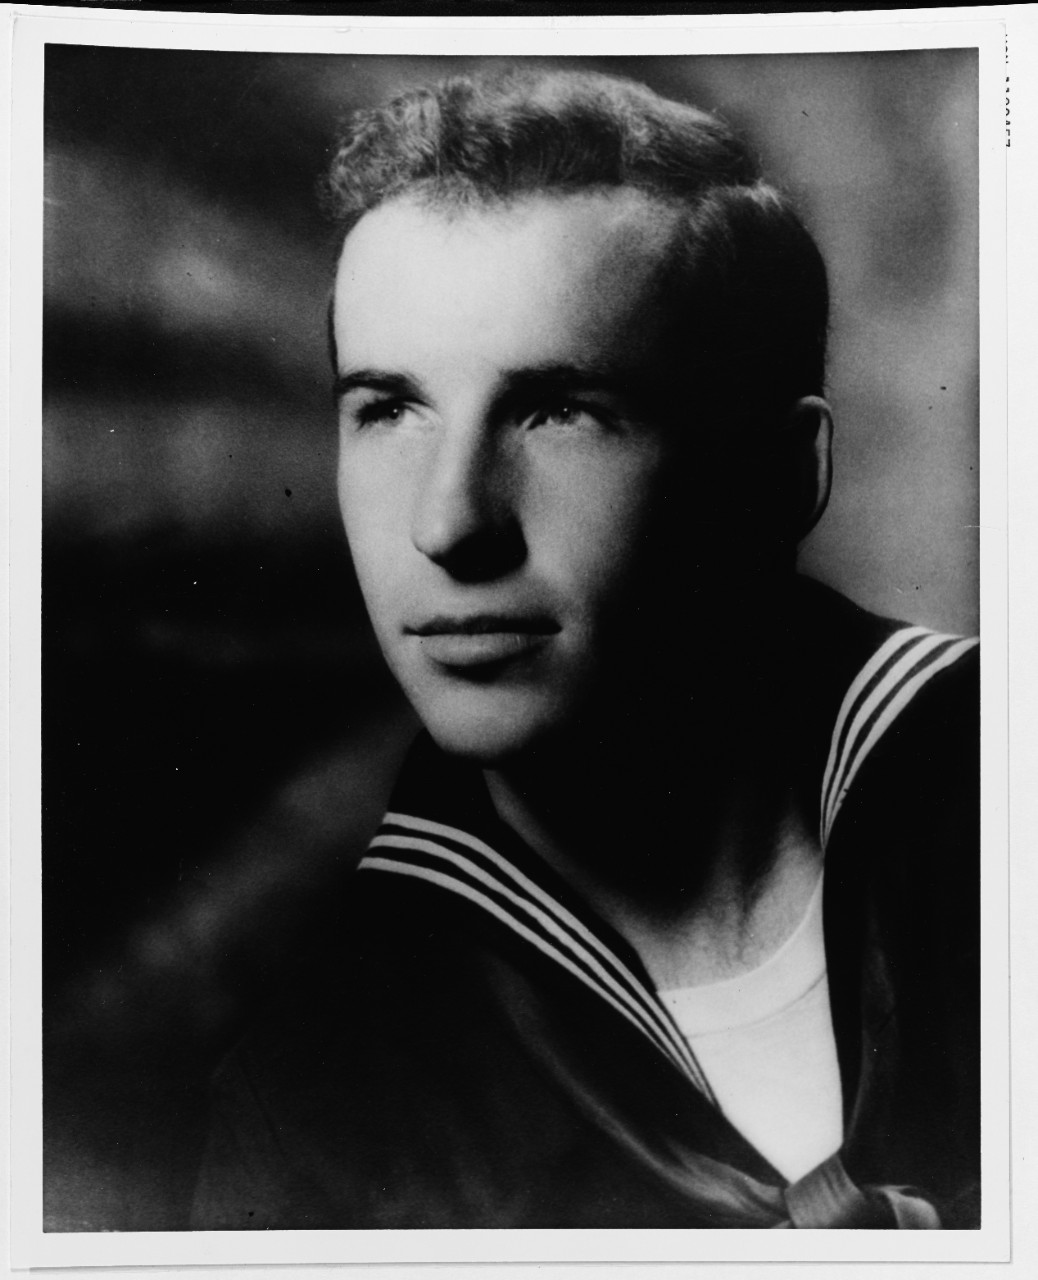 Seaman David G. Ouellet, USN